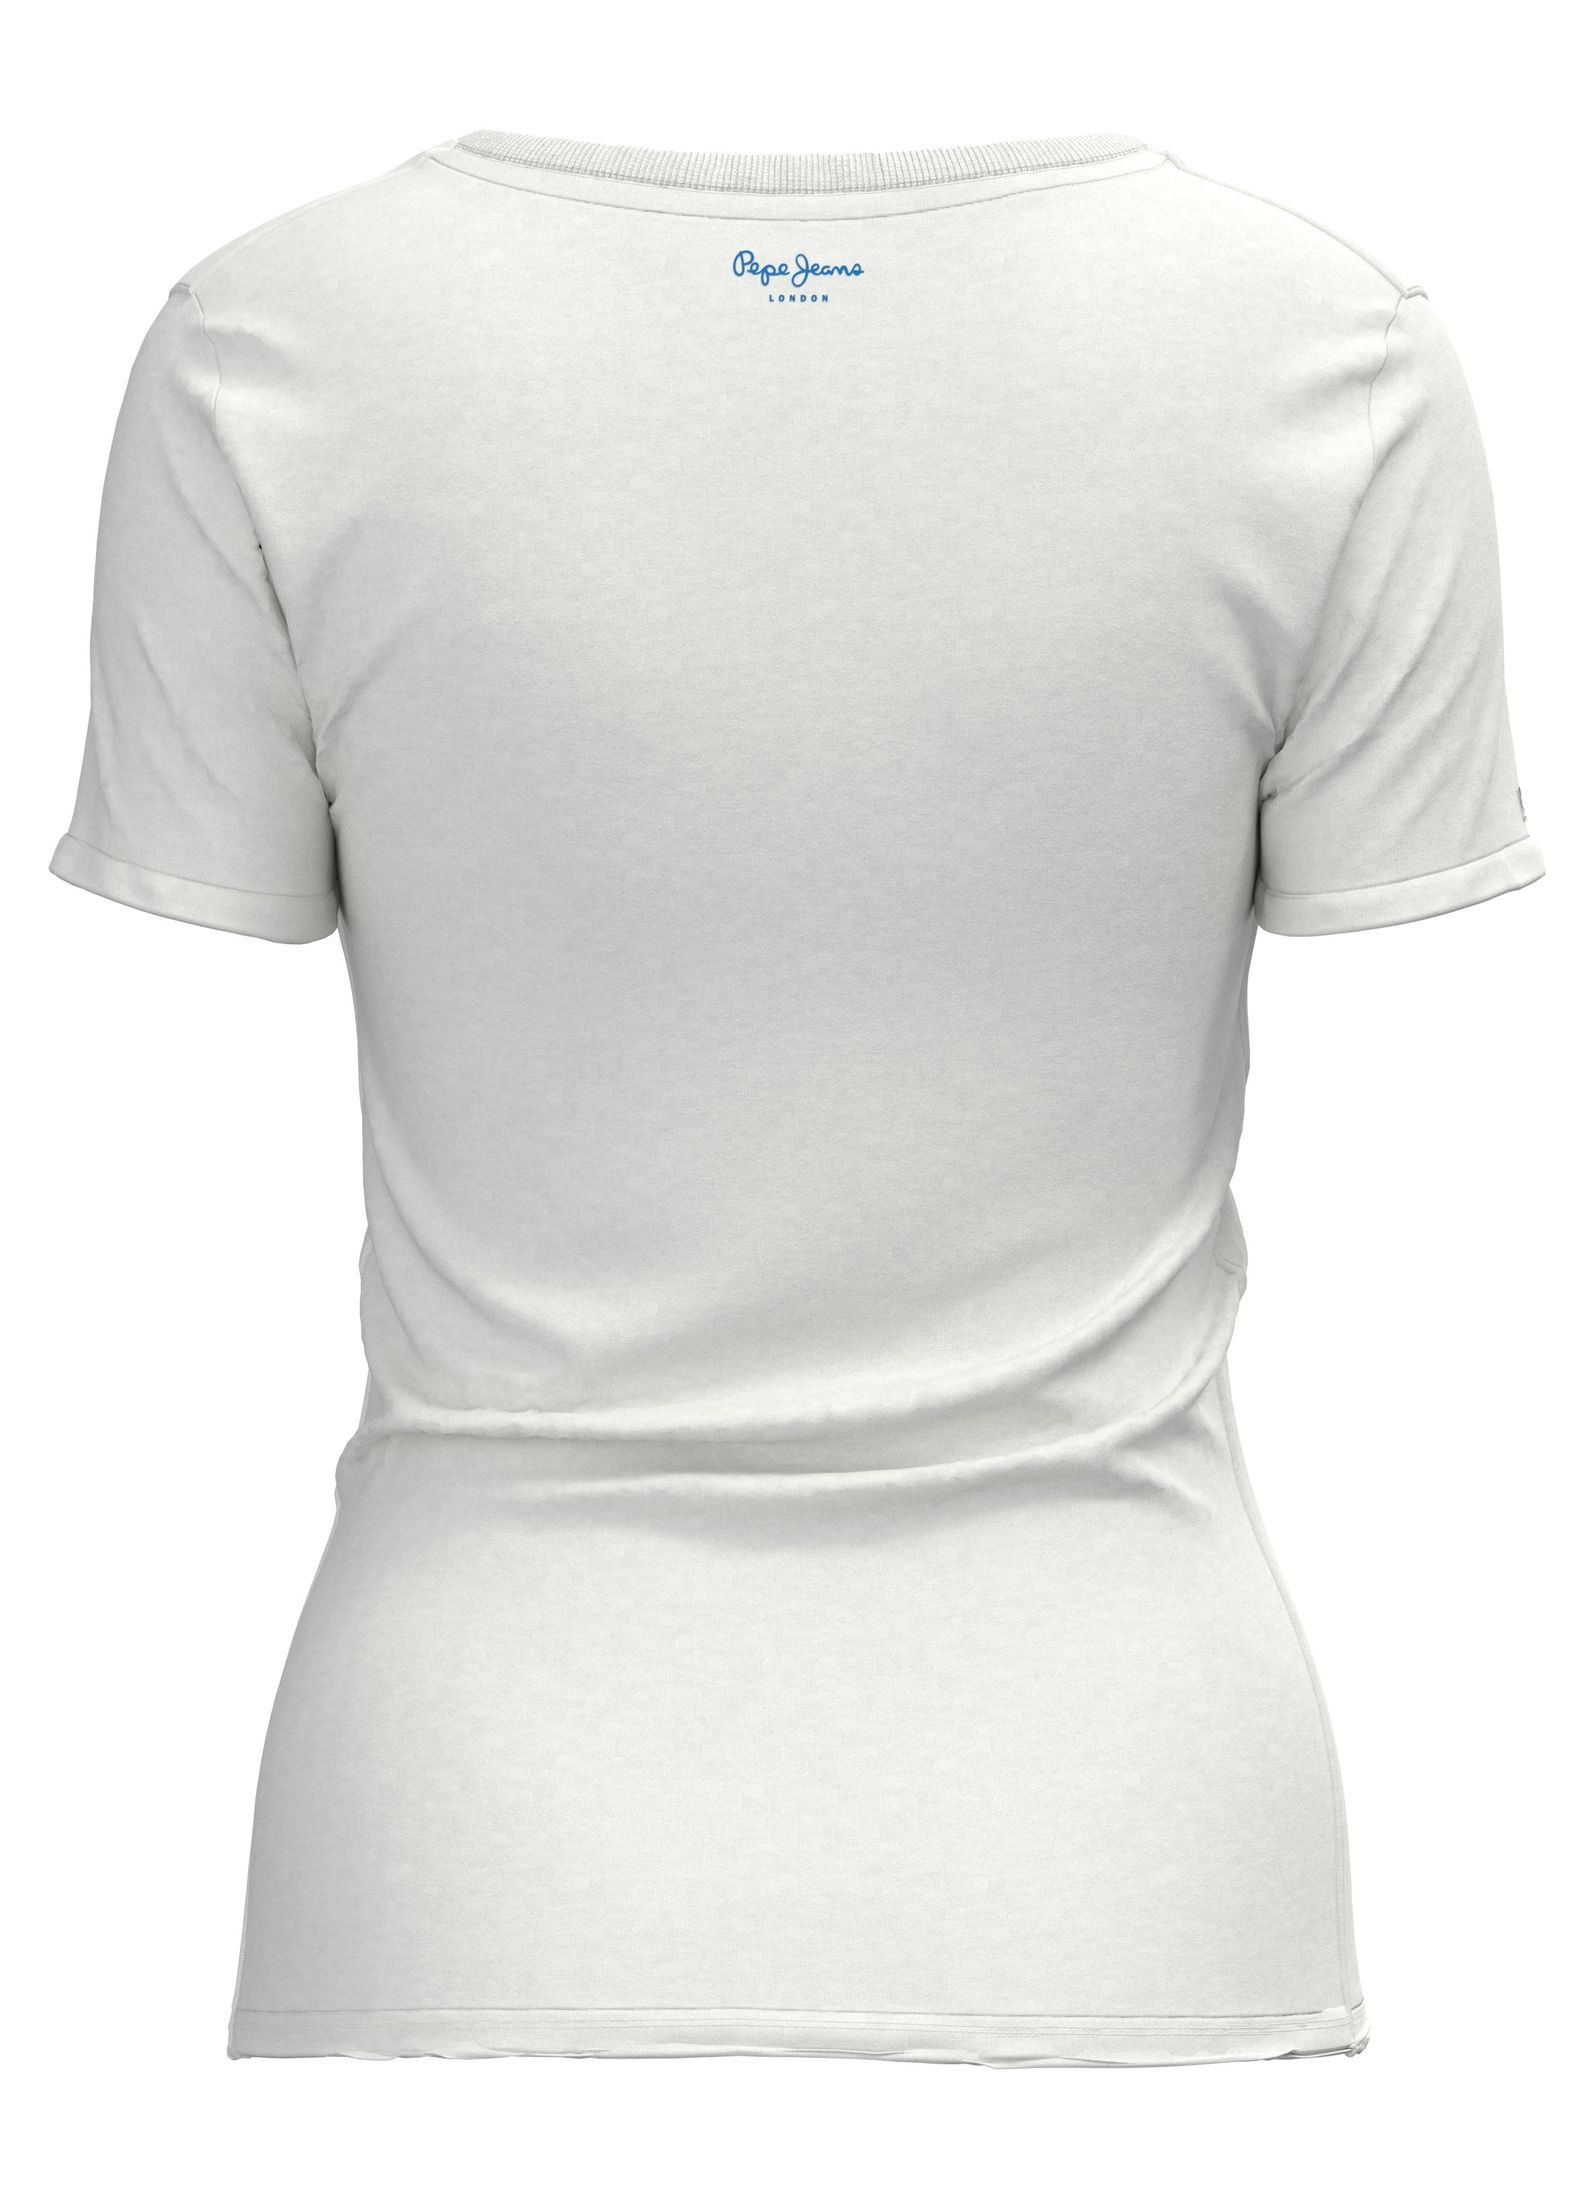 T-shirt, Bianco, large image number 1